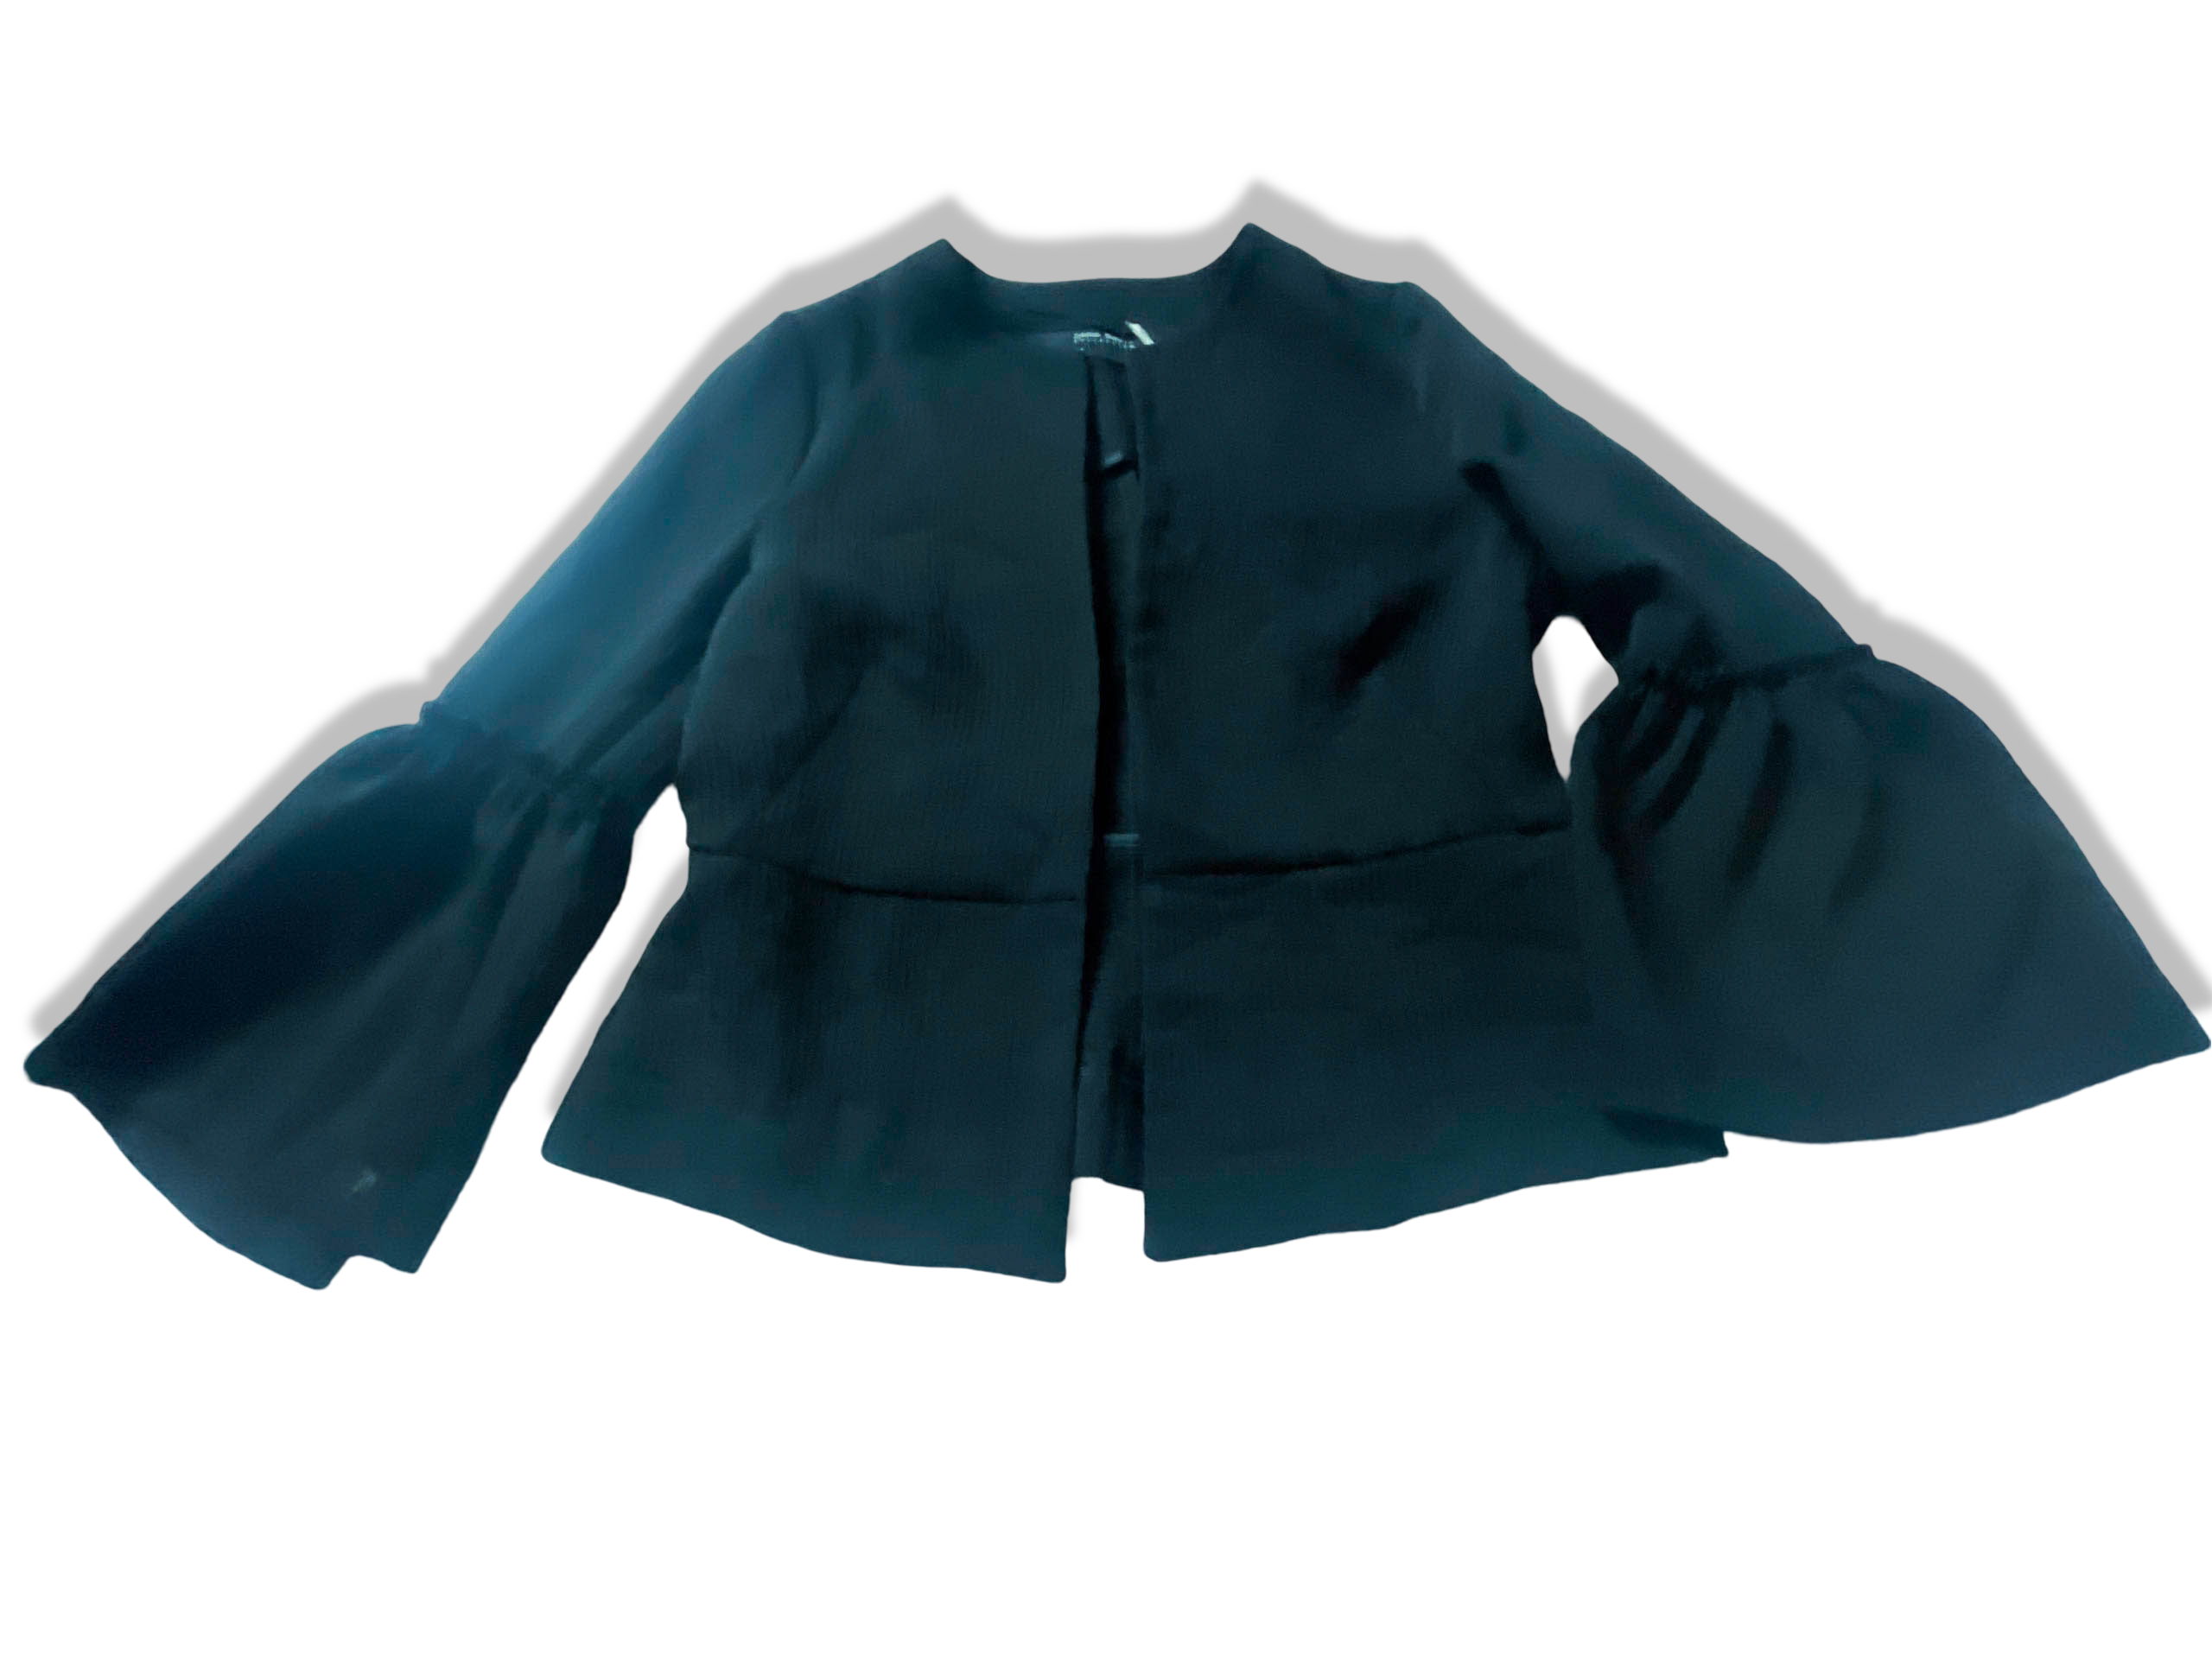 Vintage Women's Black Zara Basic Collection Open Front top ruffle bell sleeve in XS|L21W16|SKU 3951